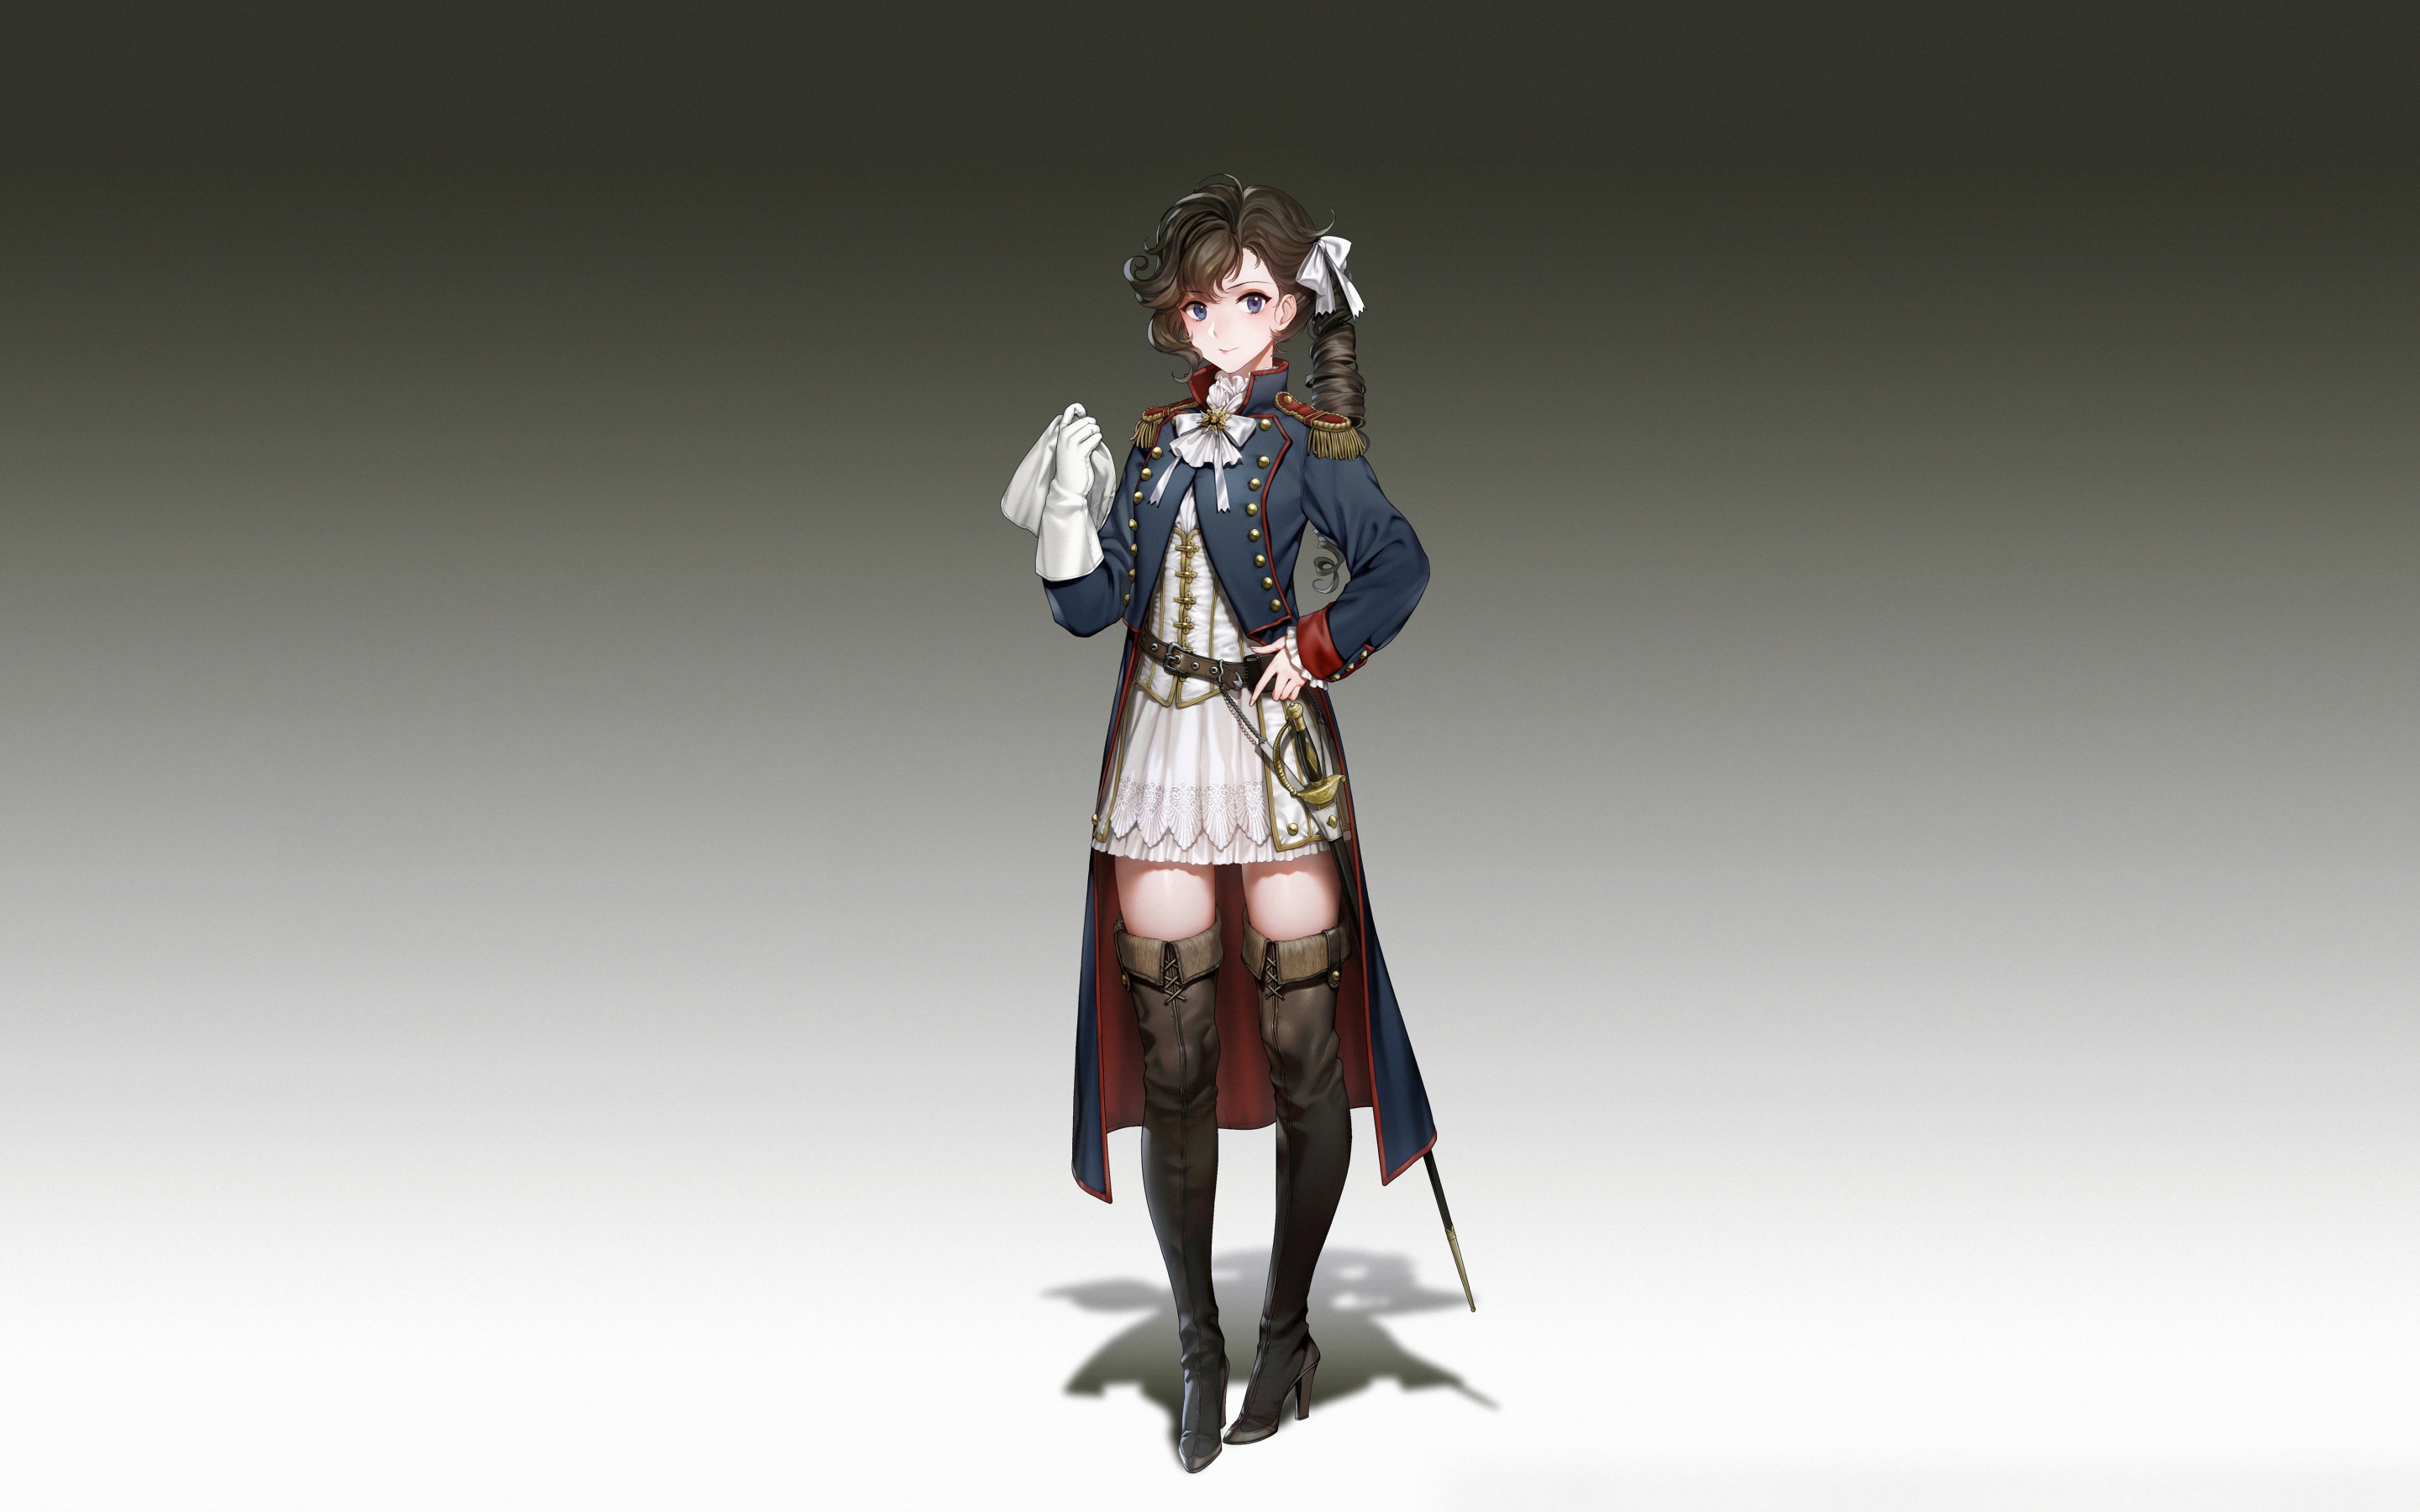 Military, anime girl, uniform, beautiful, 2019, 2880x1800 wallpaper